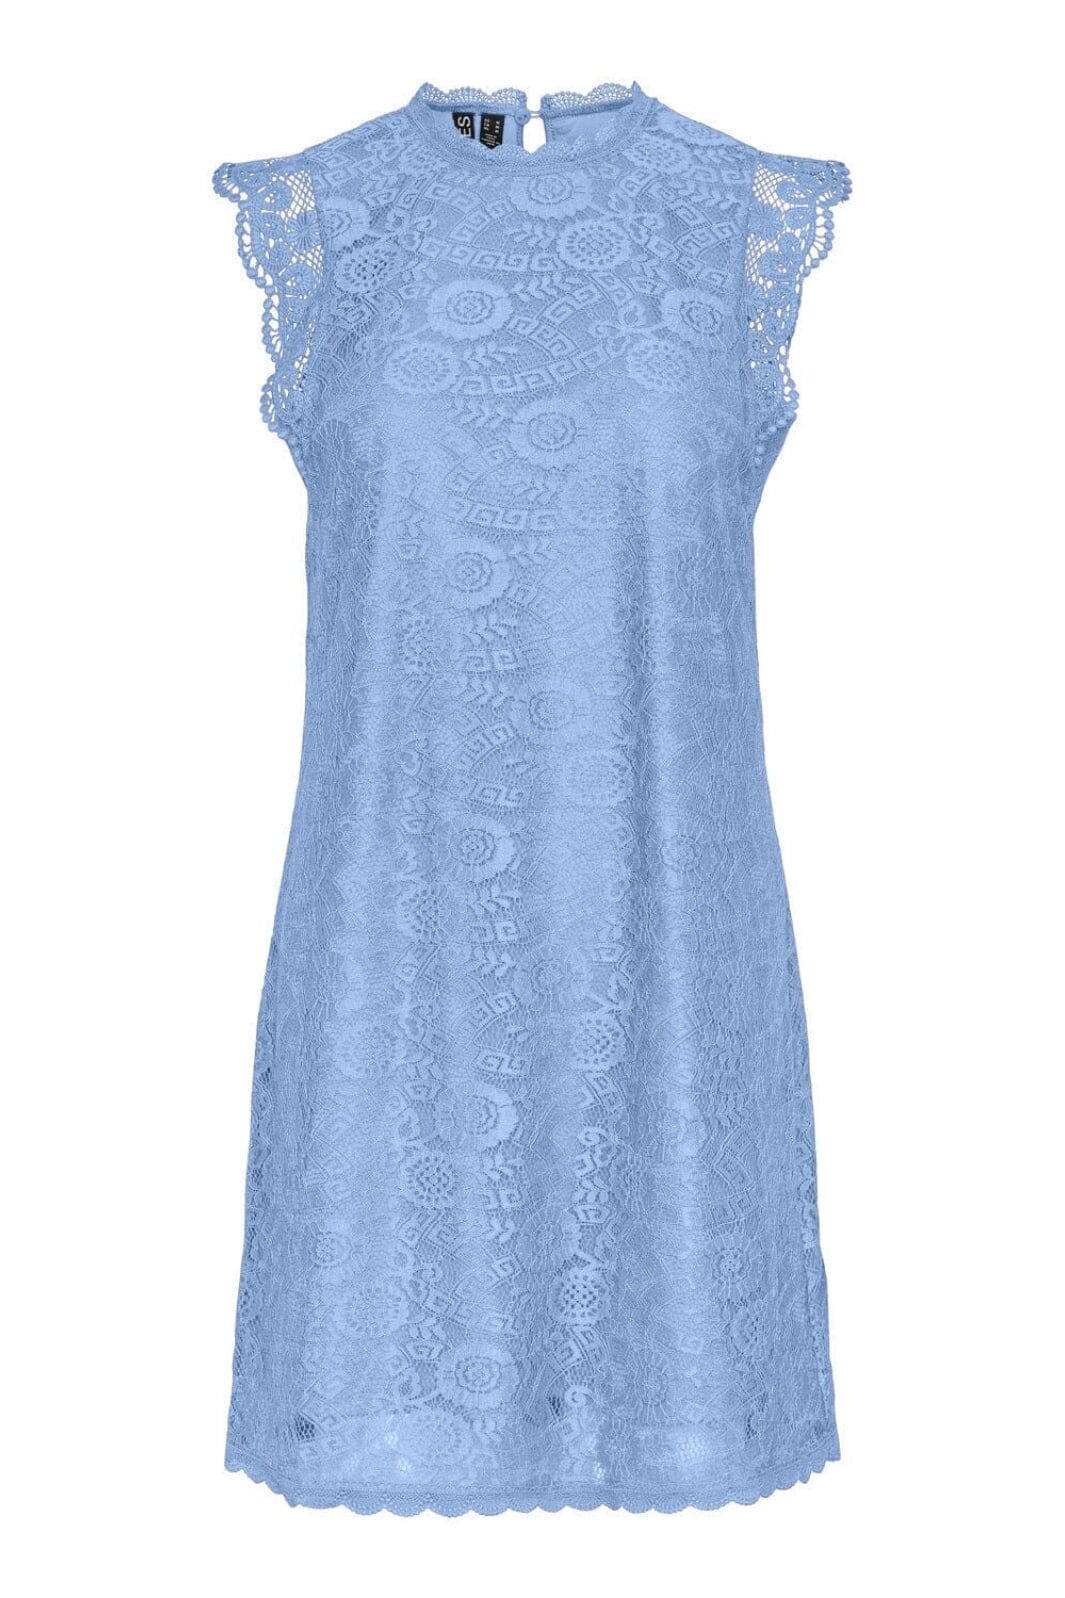 Pieces - Pcolline Sl Lace Dress - 4479965 Hydrangea Kjoler 